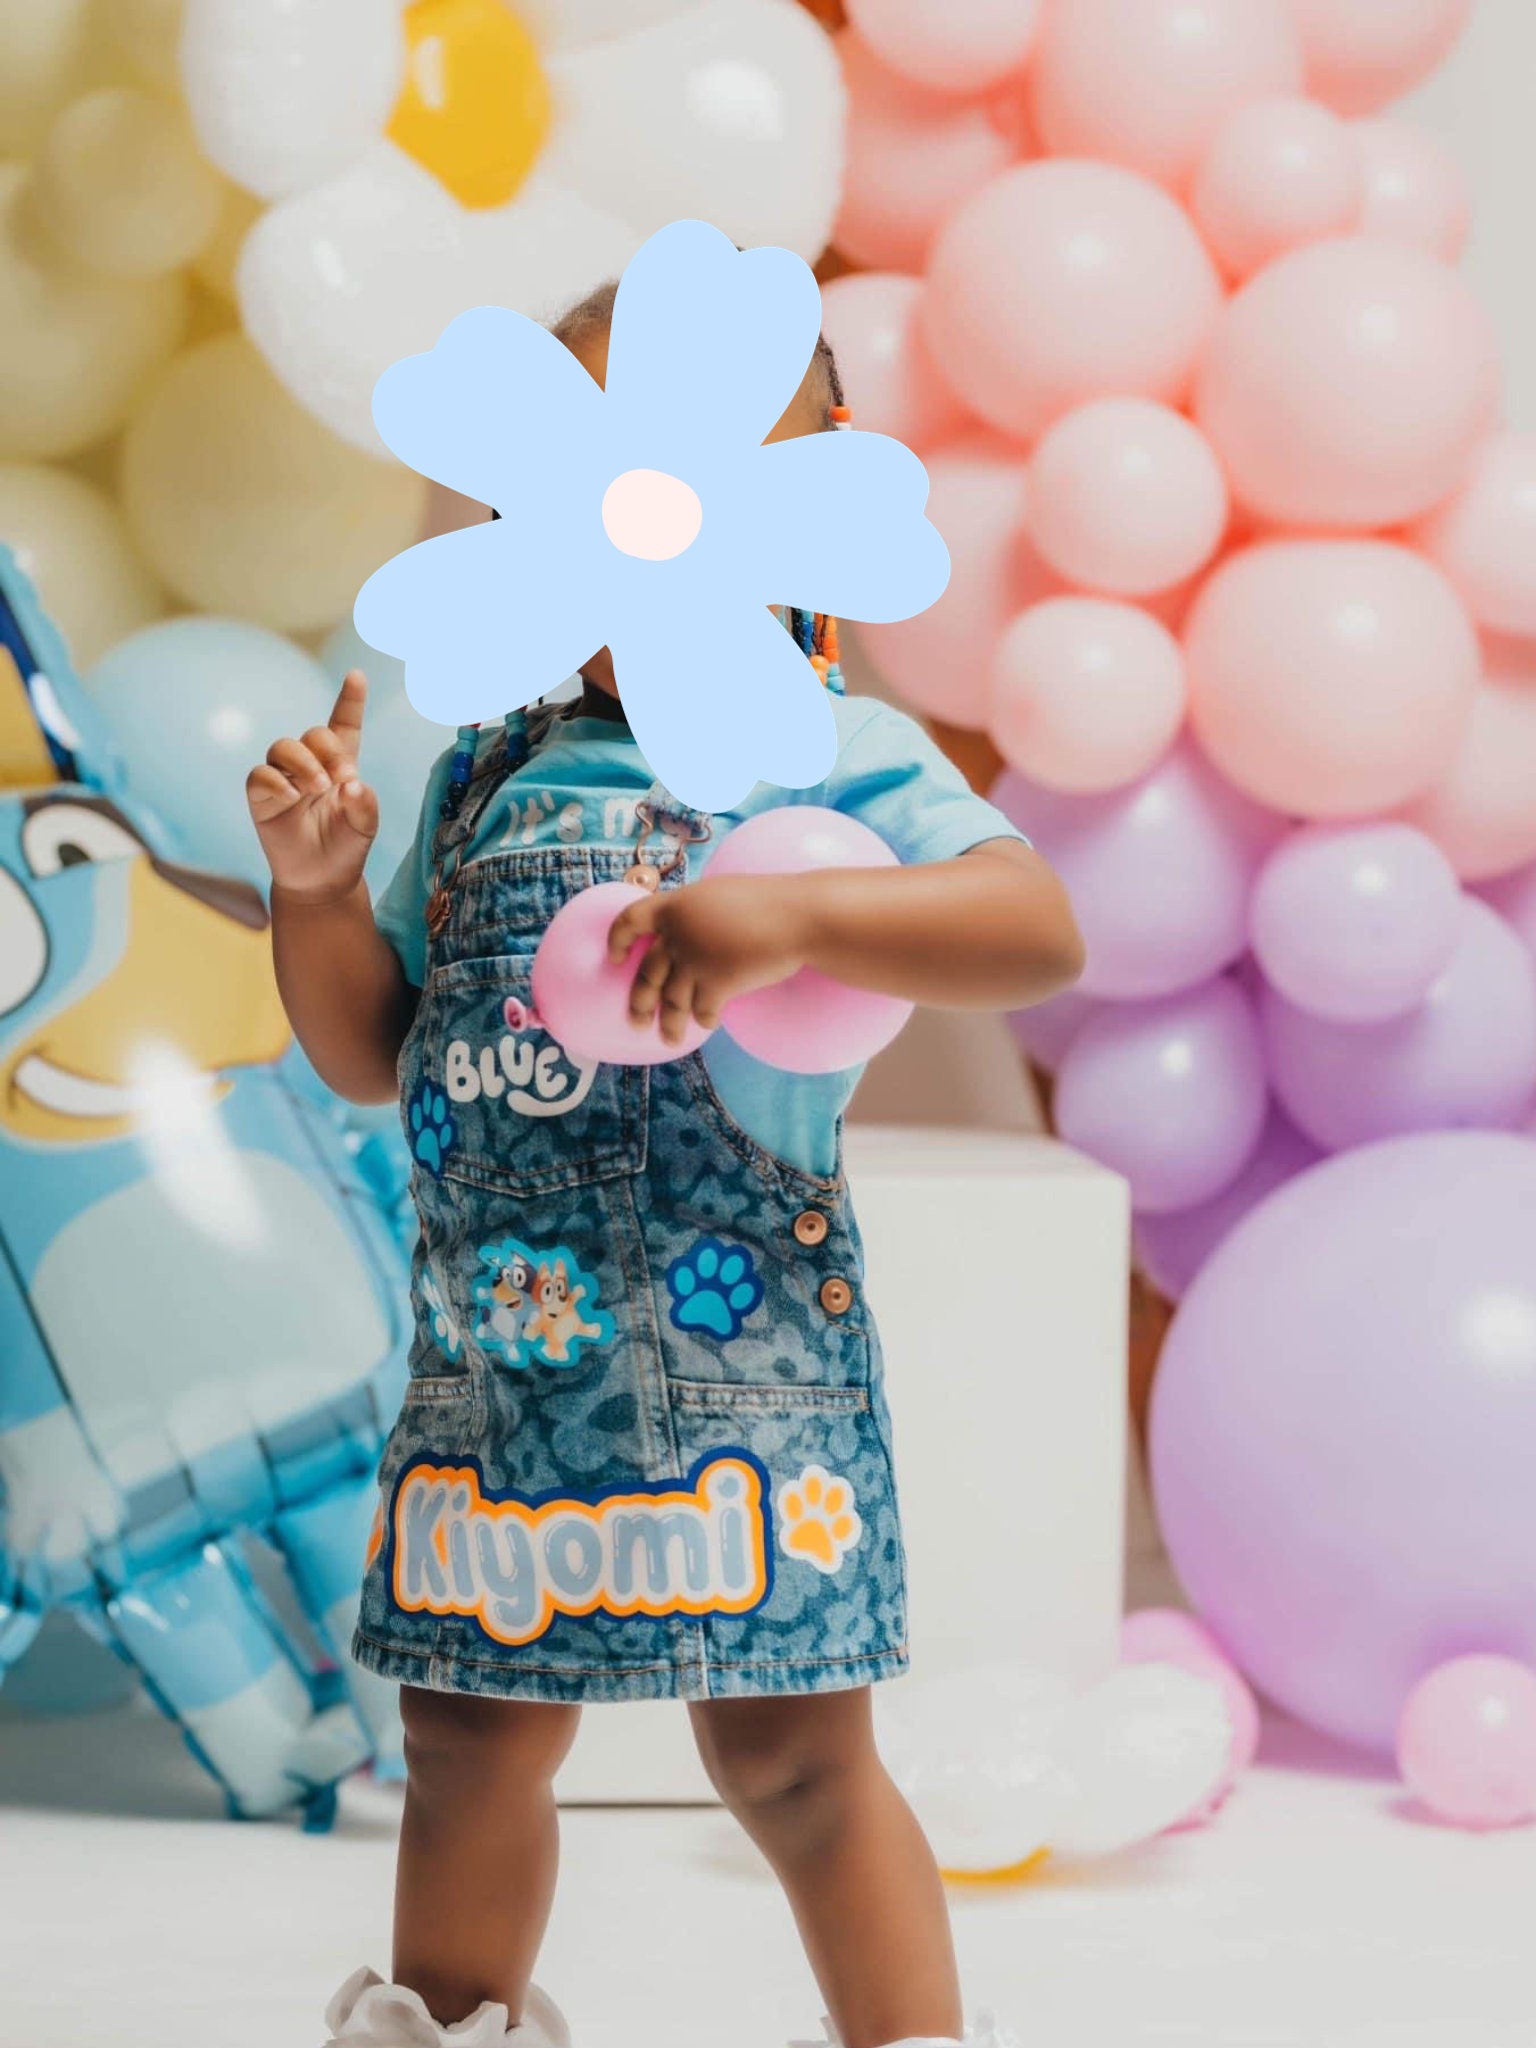 Bluey Birthday Shirt Bluey Inspired Birthday Girl Outfit For Baby